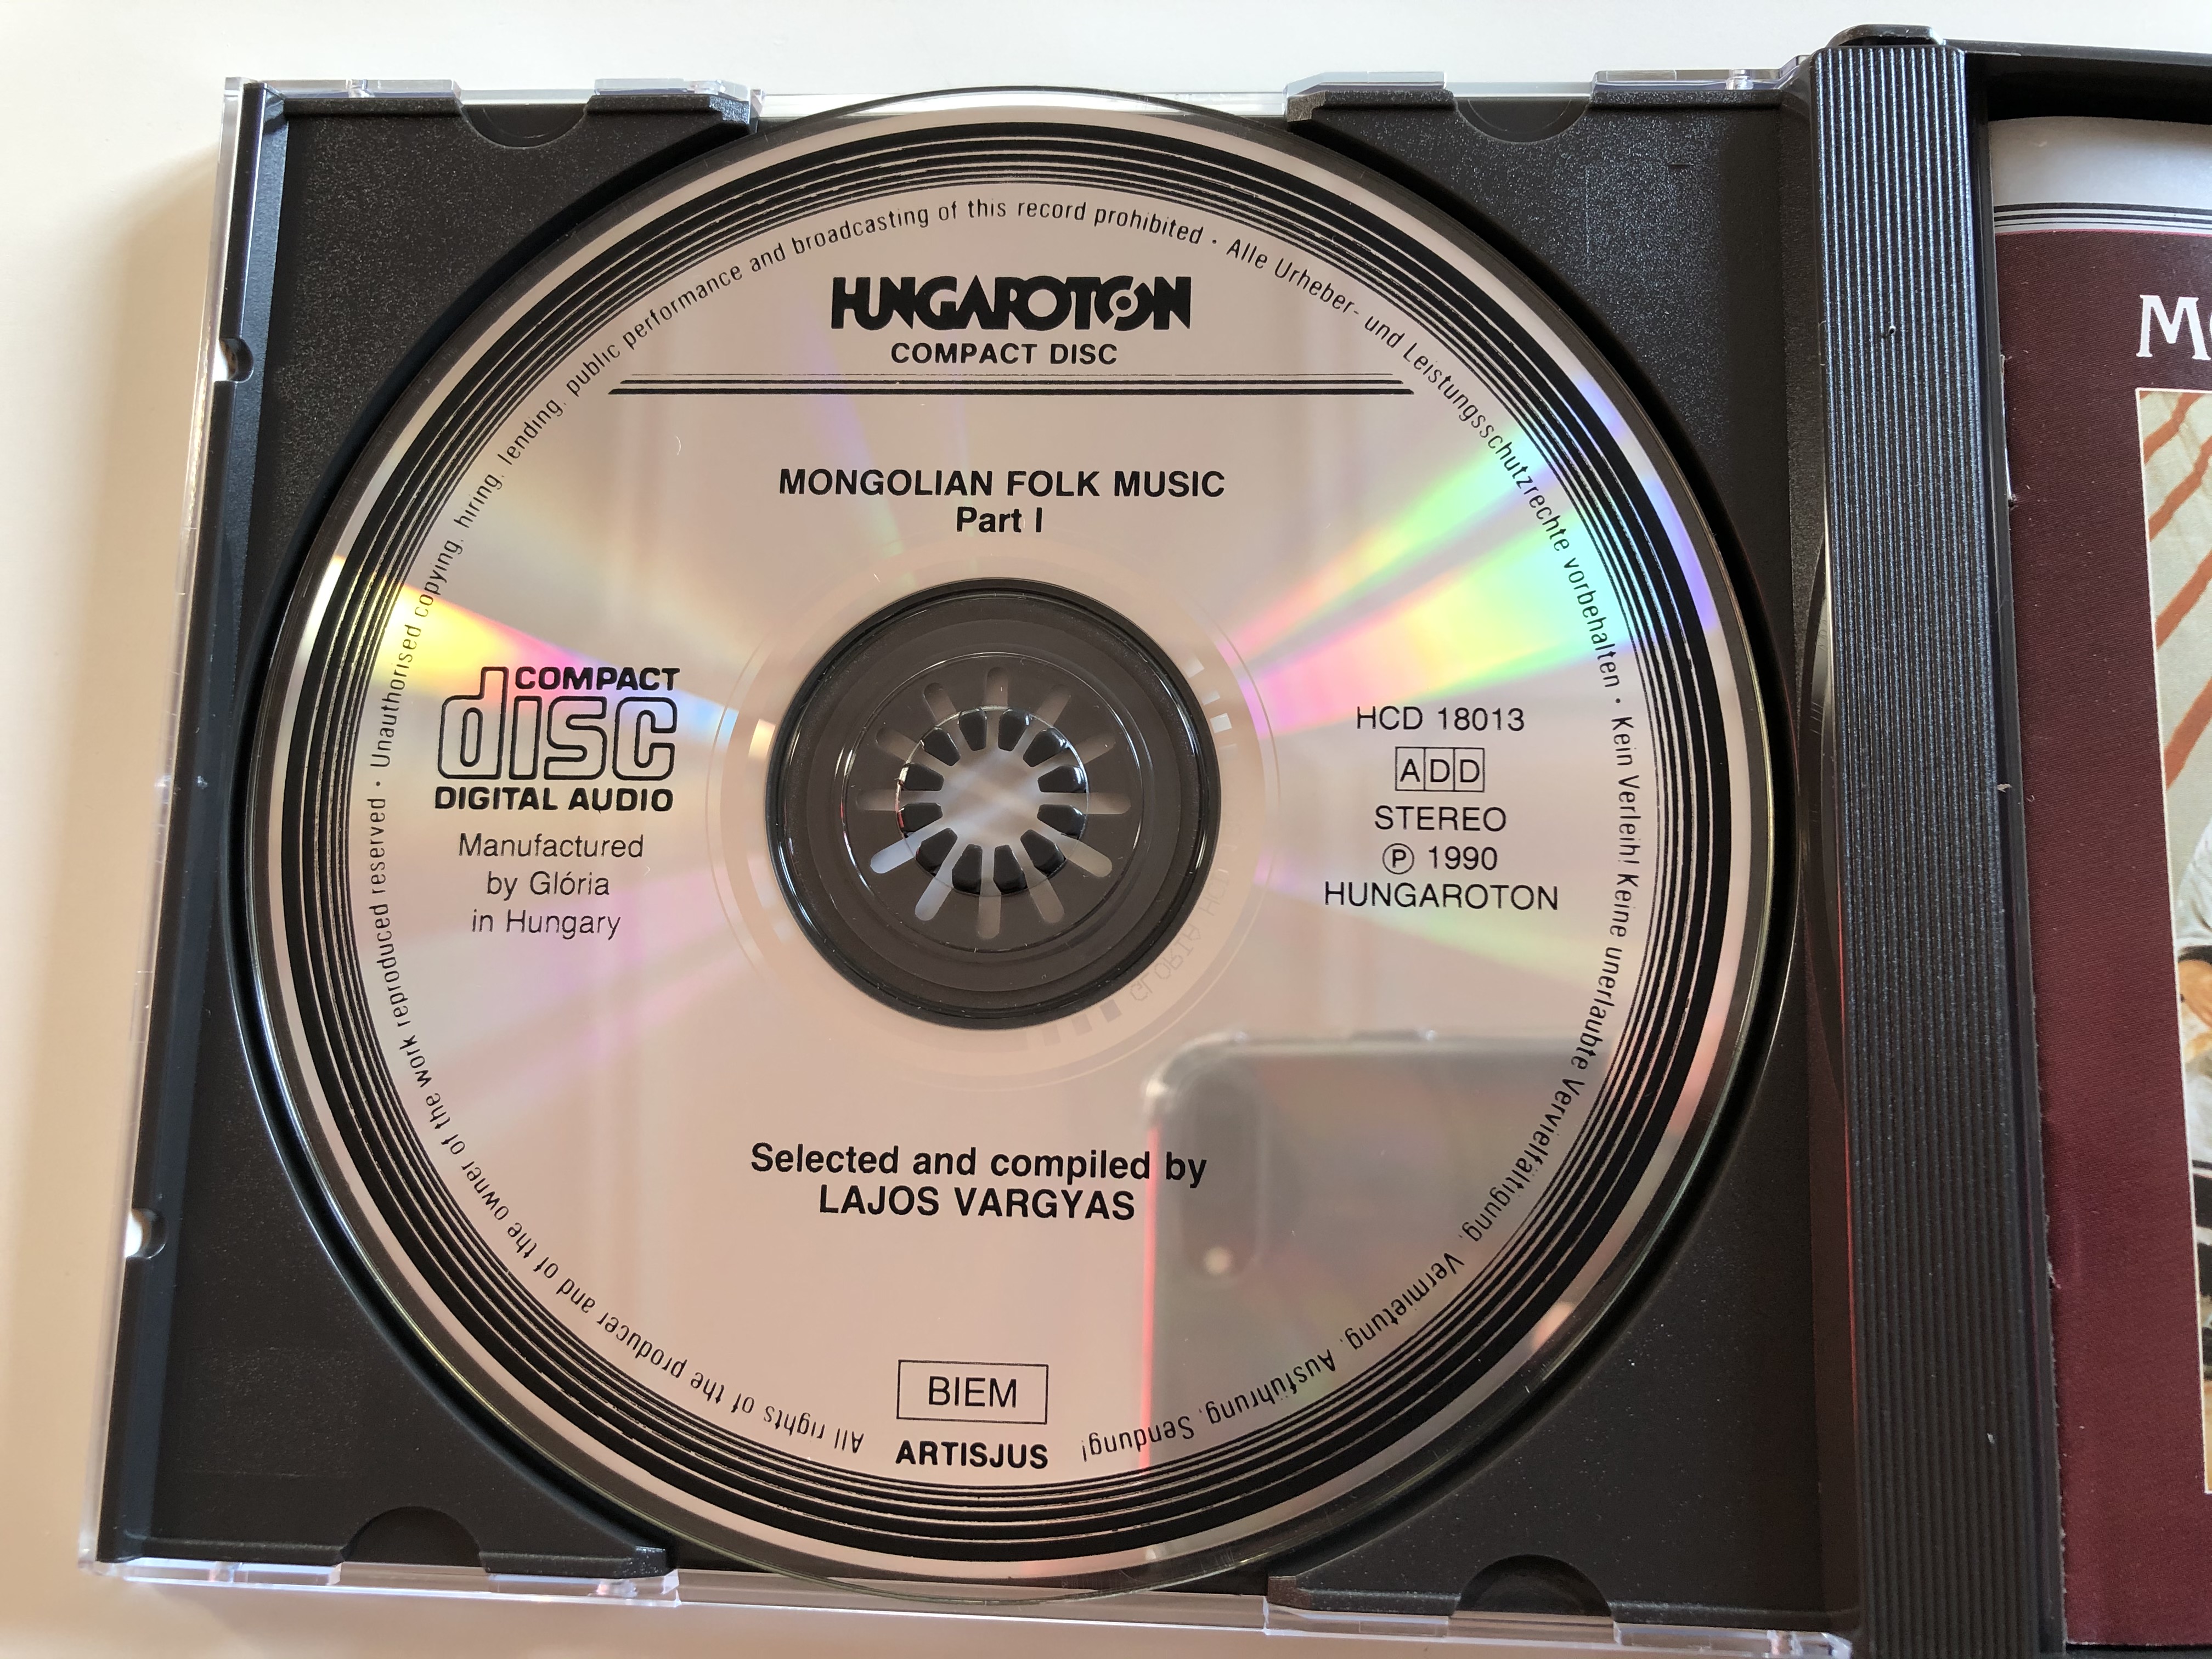 mongolian-folk-music-a-hungaroton-unesco-collaboration-hungaroton-2x-audio-cd-box-set-1990-stereo-hcd-18013-14-2-.jpg